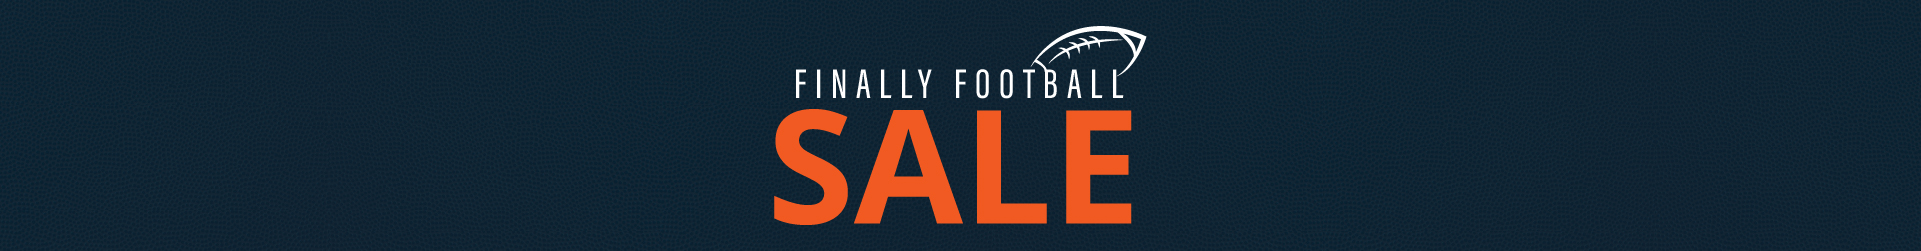 Finally Football Sale